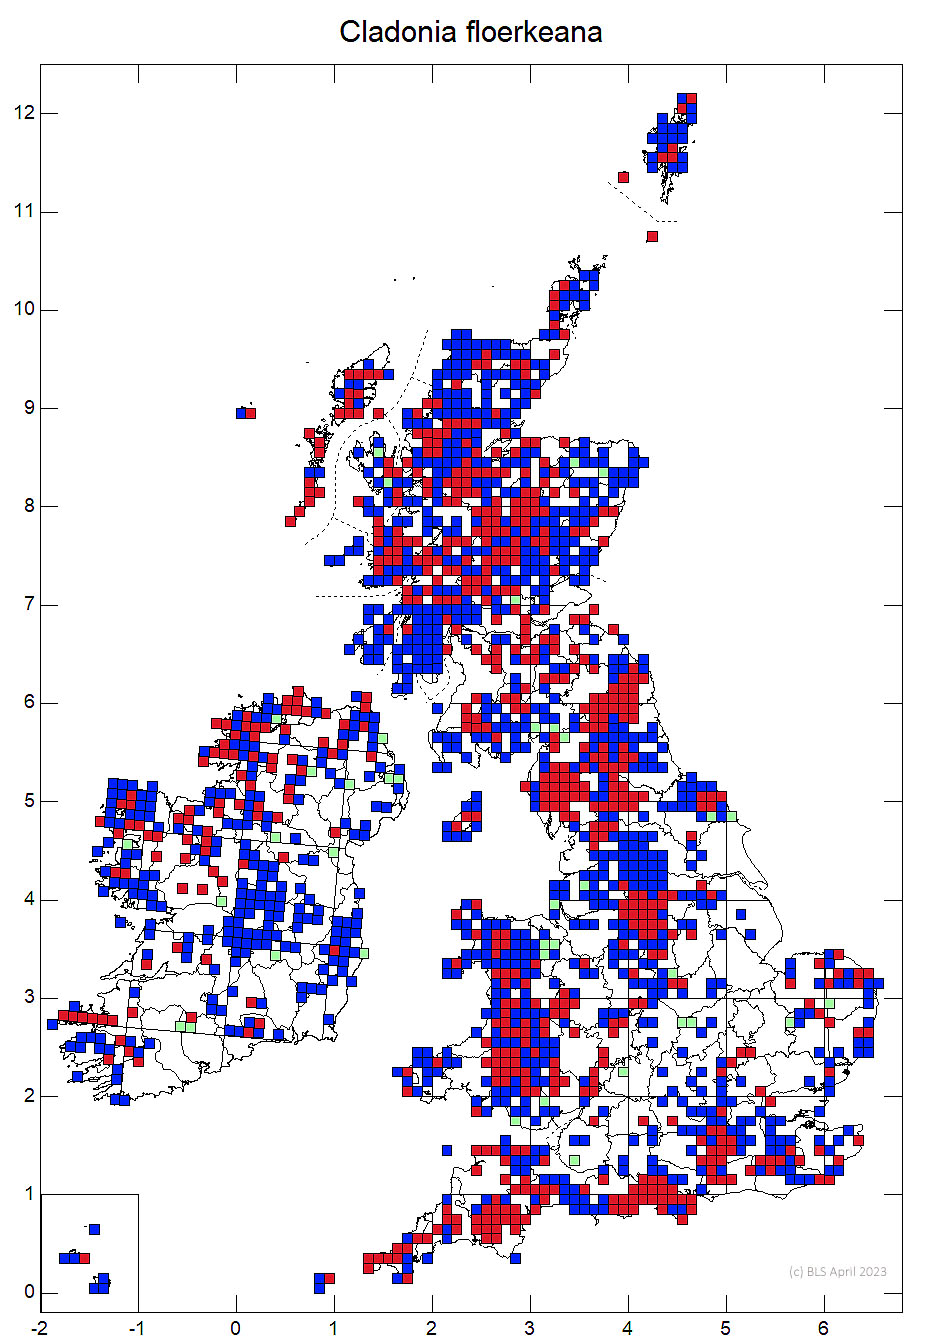 Cladonia floerkeana 10km sq distribution map